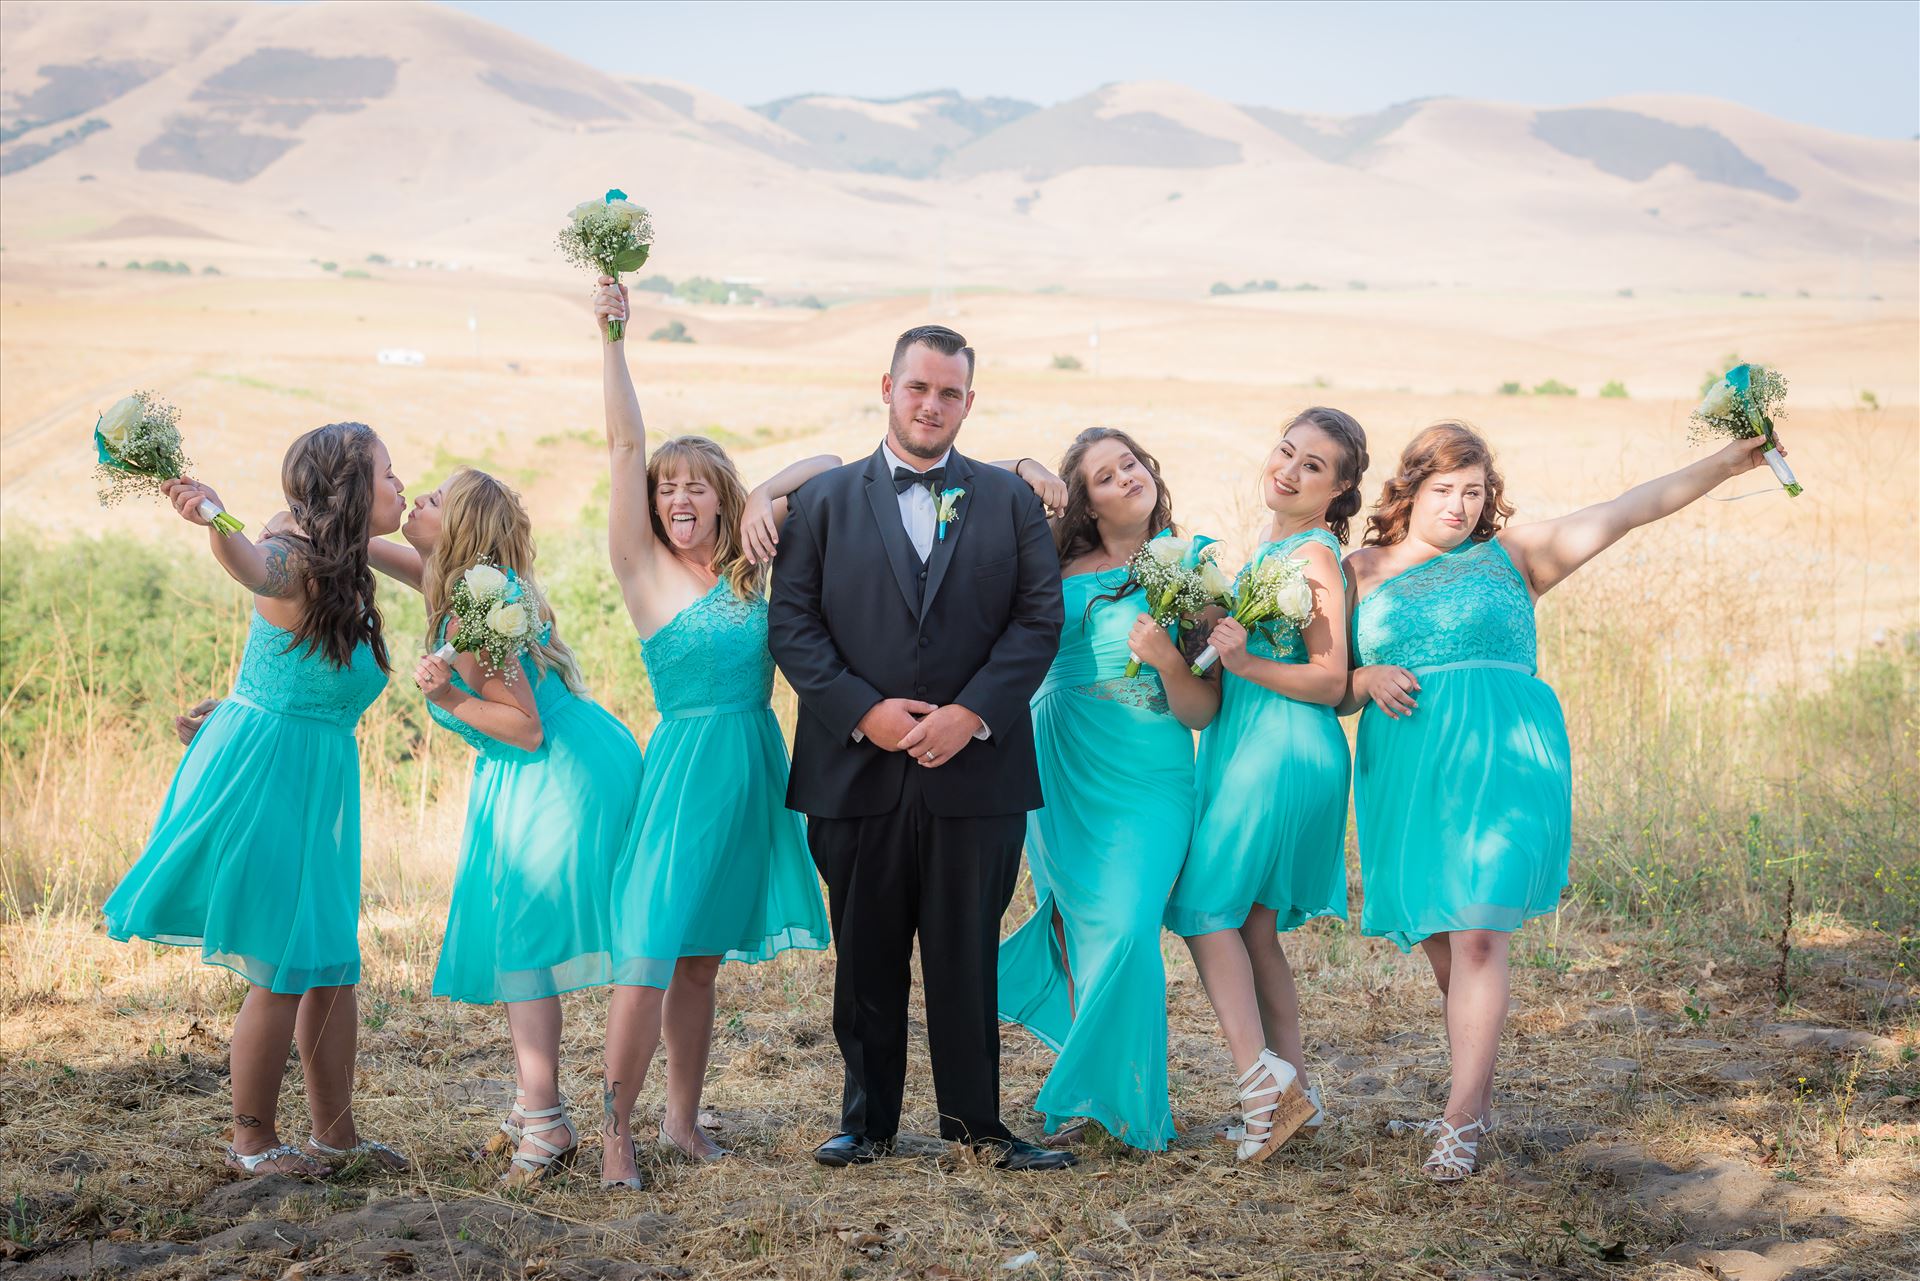 Cherie and Brandon 070 - Mirror's Edge Photography, a San Luis Obispo Wedding Photographer, captures a wedding at the Historic Dana Adobe in Nipomo California.  Fun groom and bridesmaids. by Sarah Williams